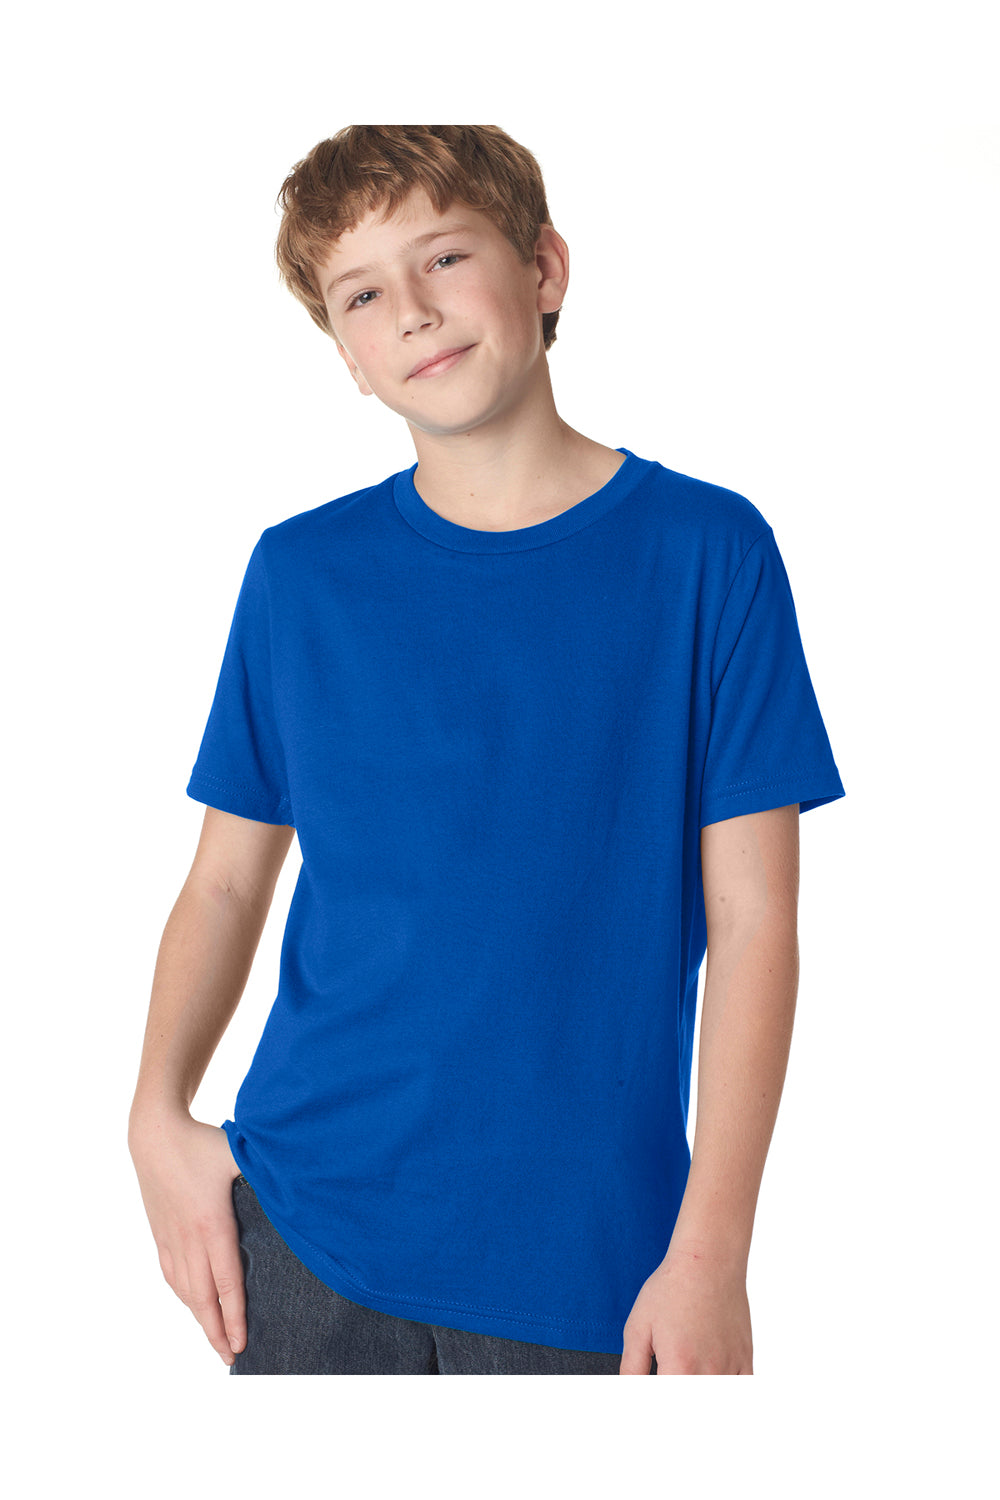 Next Level 3310 Youth Fine Jersey Short Sleeve Crewneck T-Shirt Royal Blue Front